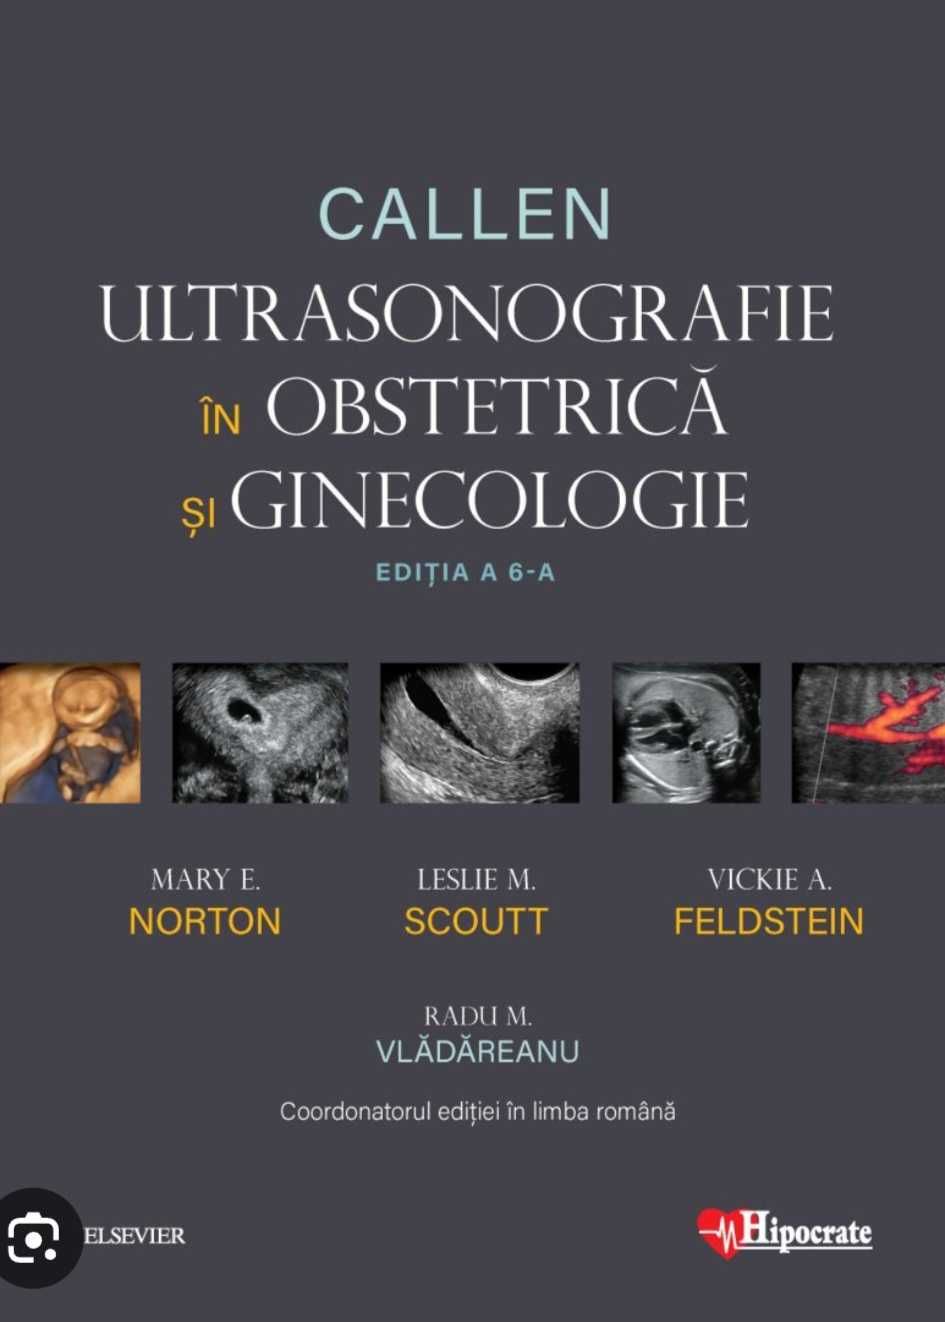 CALLEN- Ultrasonografie in obstetrica si ginecologie, editia 6